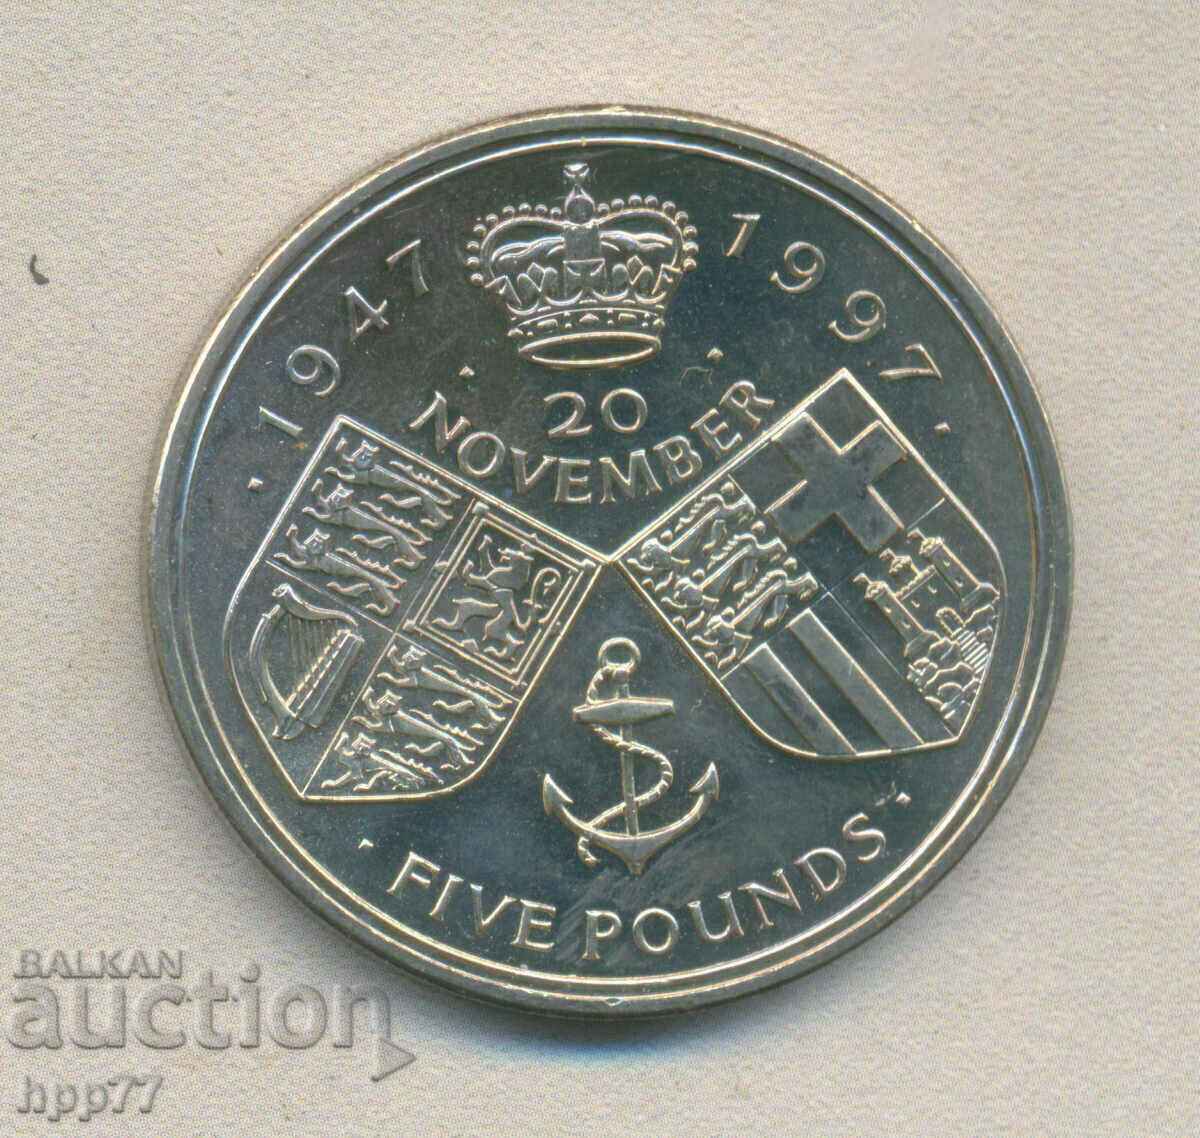 5 GBP 1997 Nunta de Aur